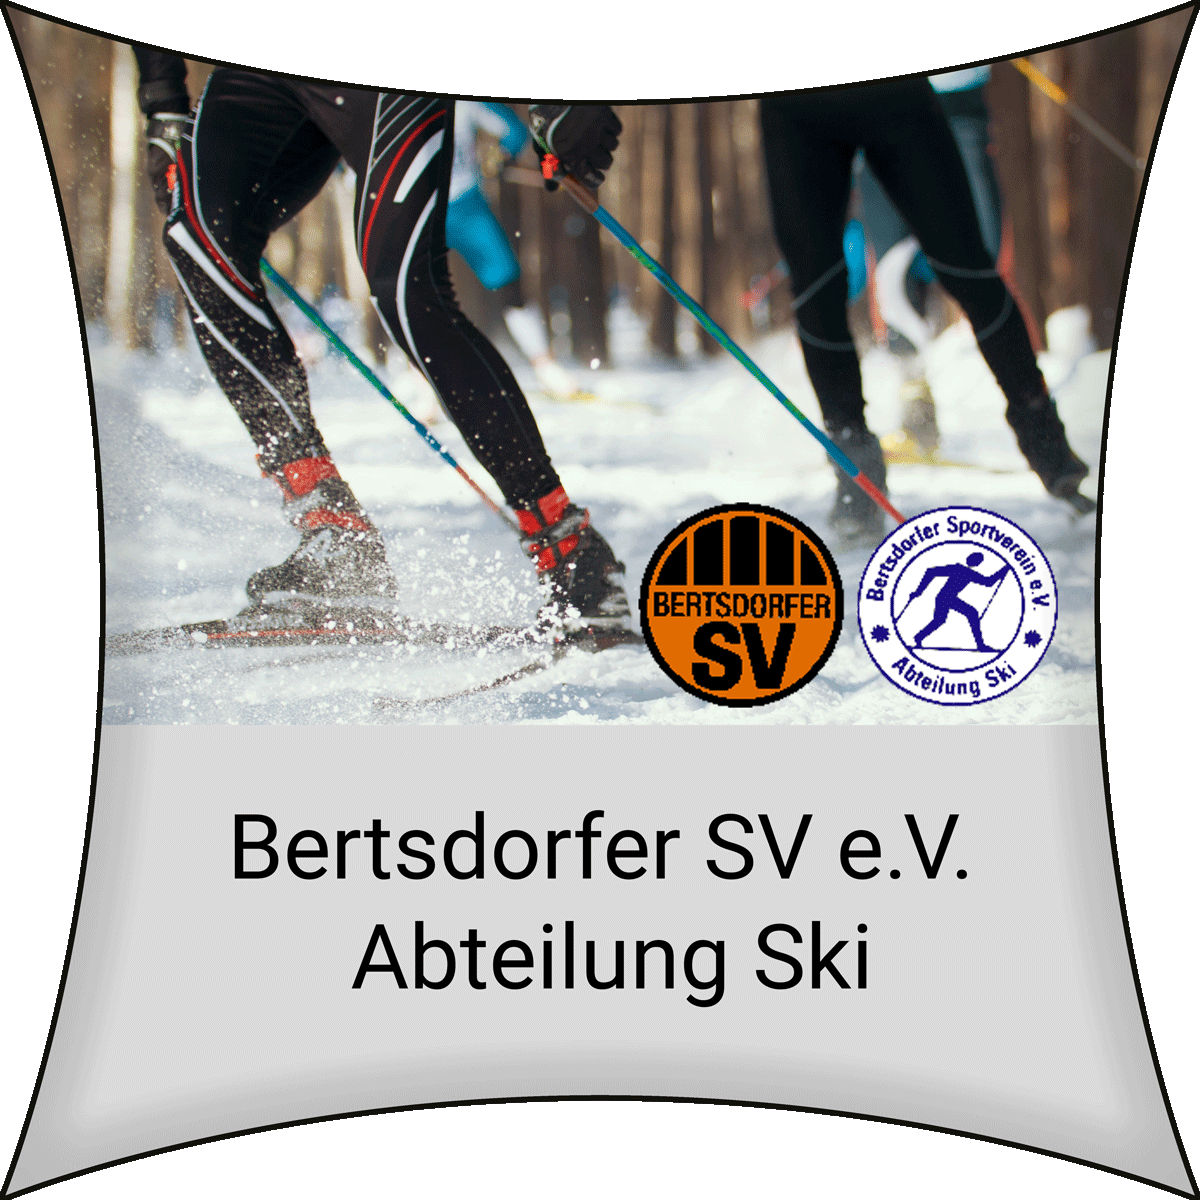 Bertsdorfer SV e.V. Abteilung Ski